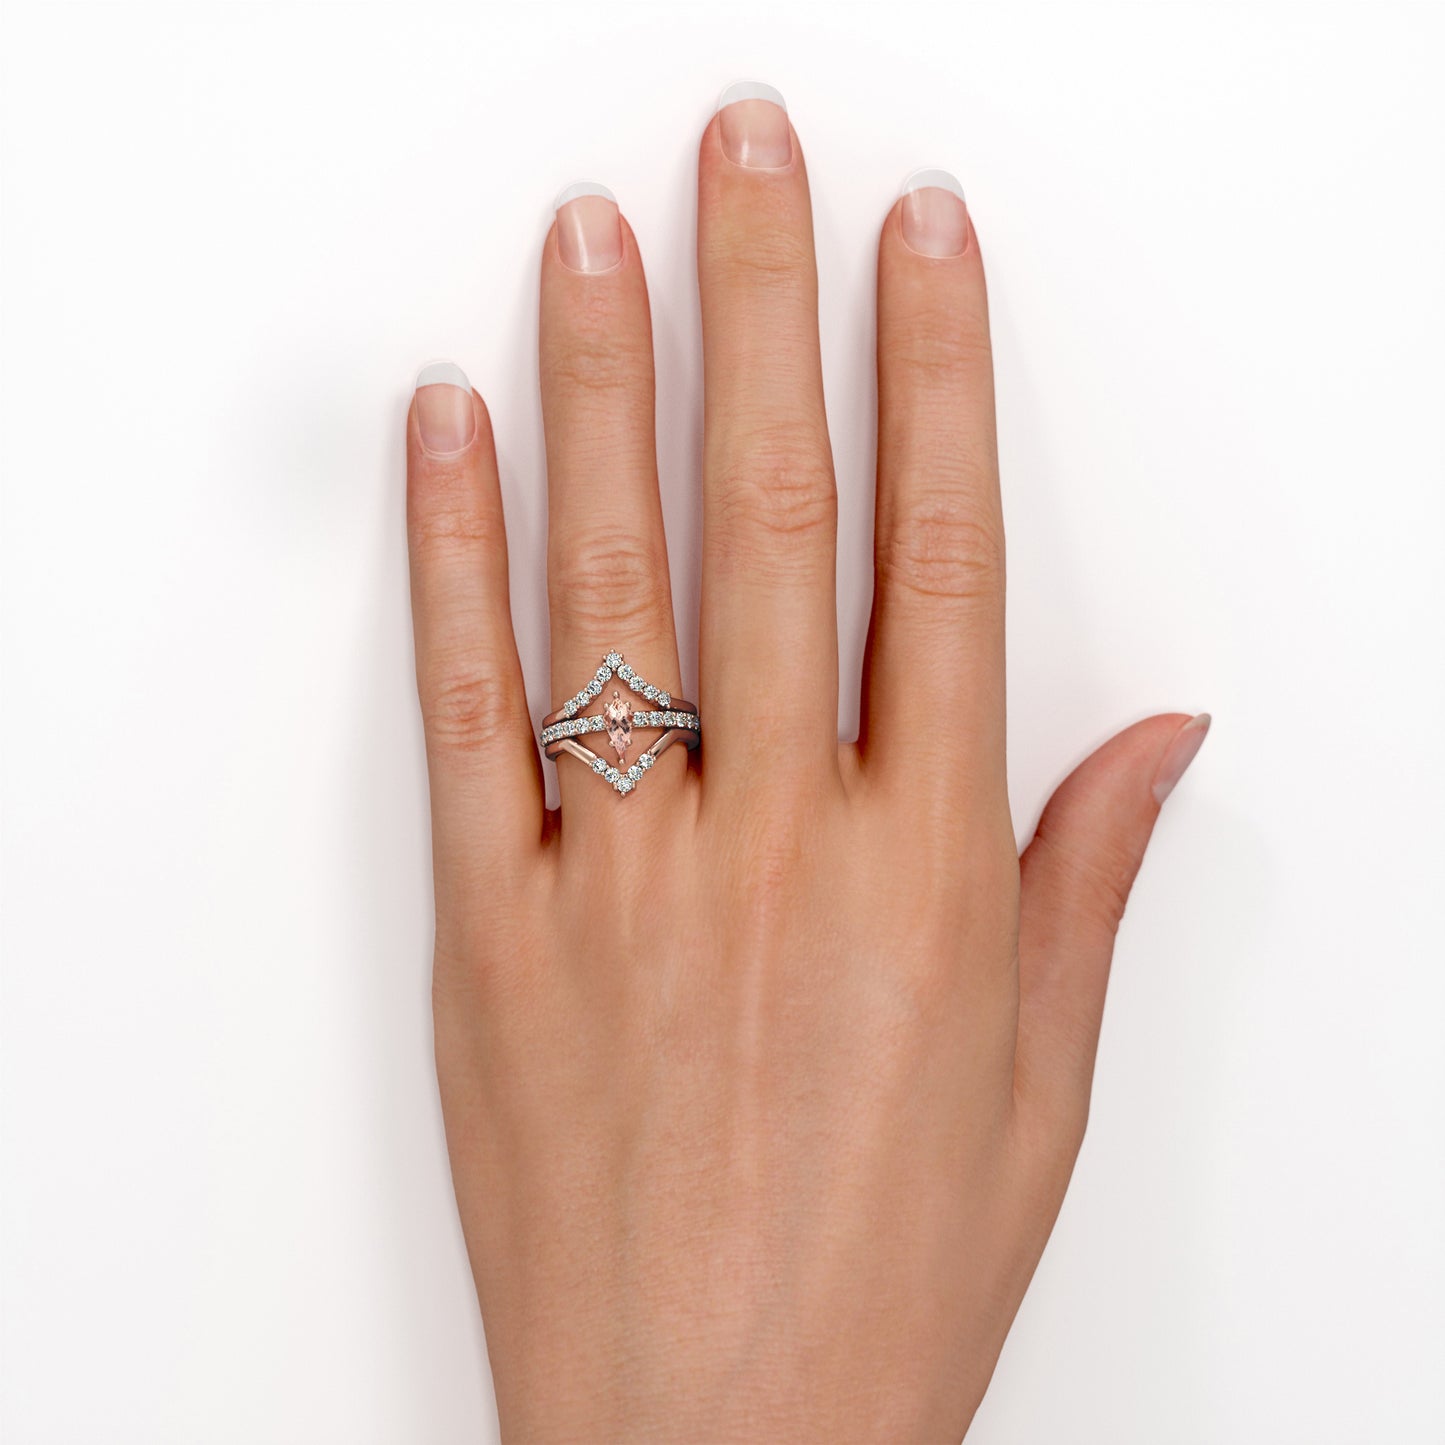 Double Tiara 1.5 carat Kite shaped Morganite and diamond chevron trio wedding ring set for her in White gold